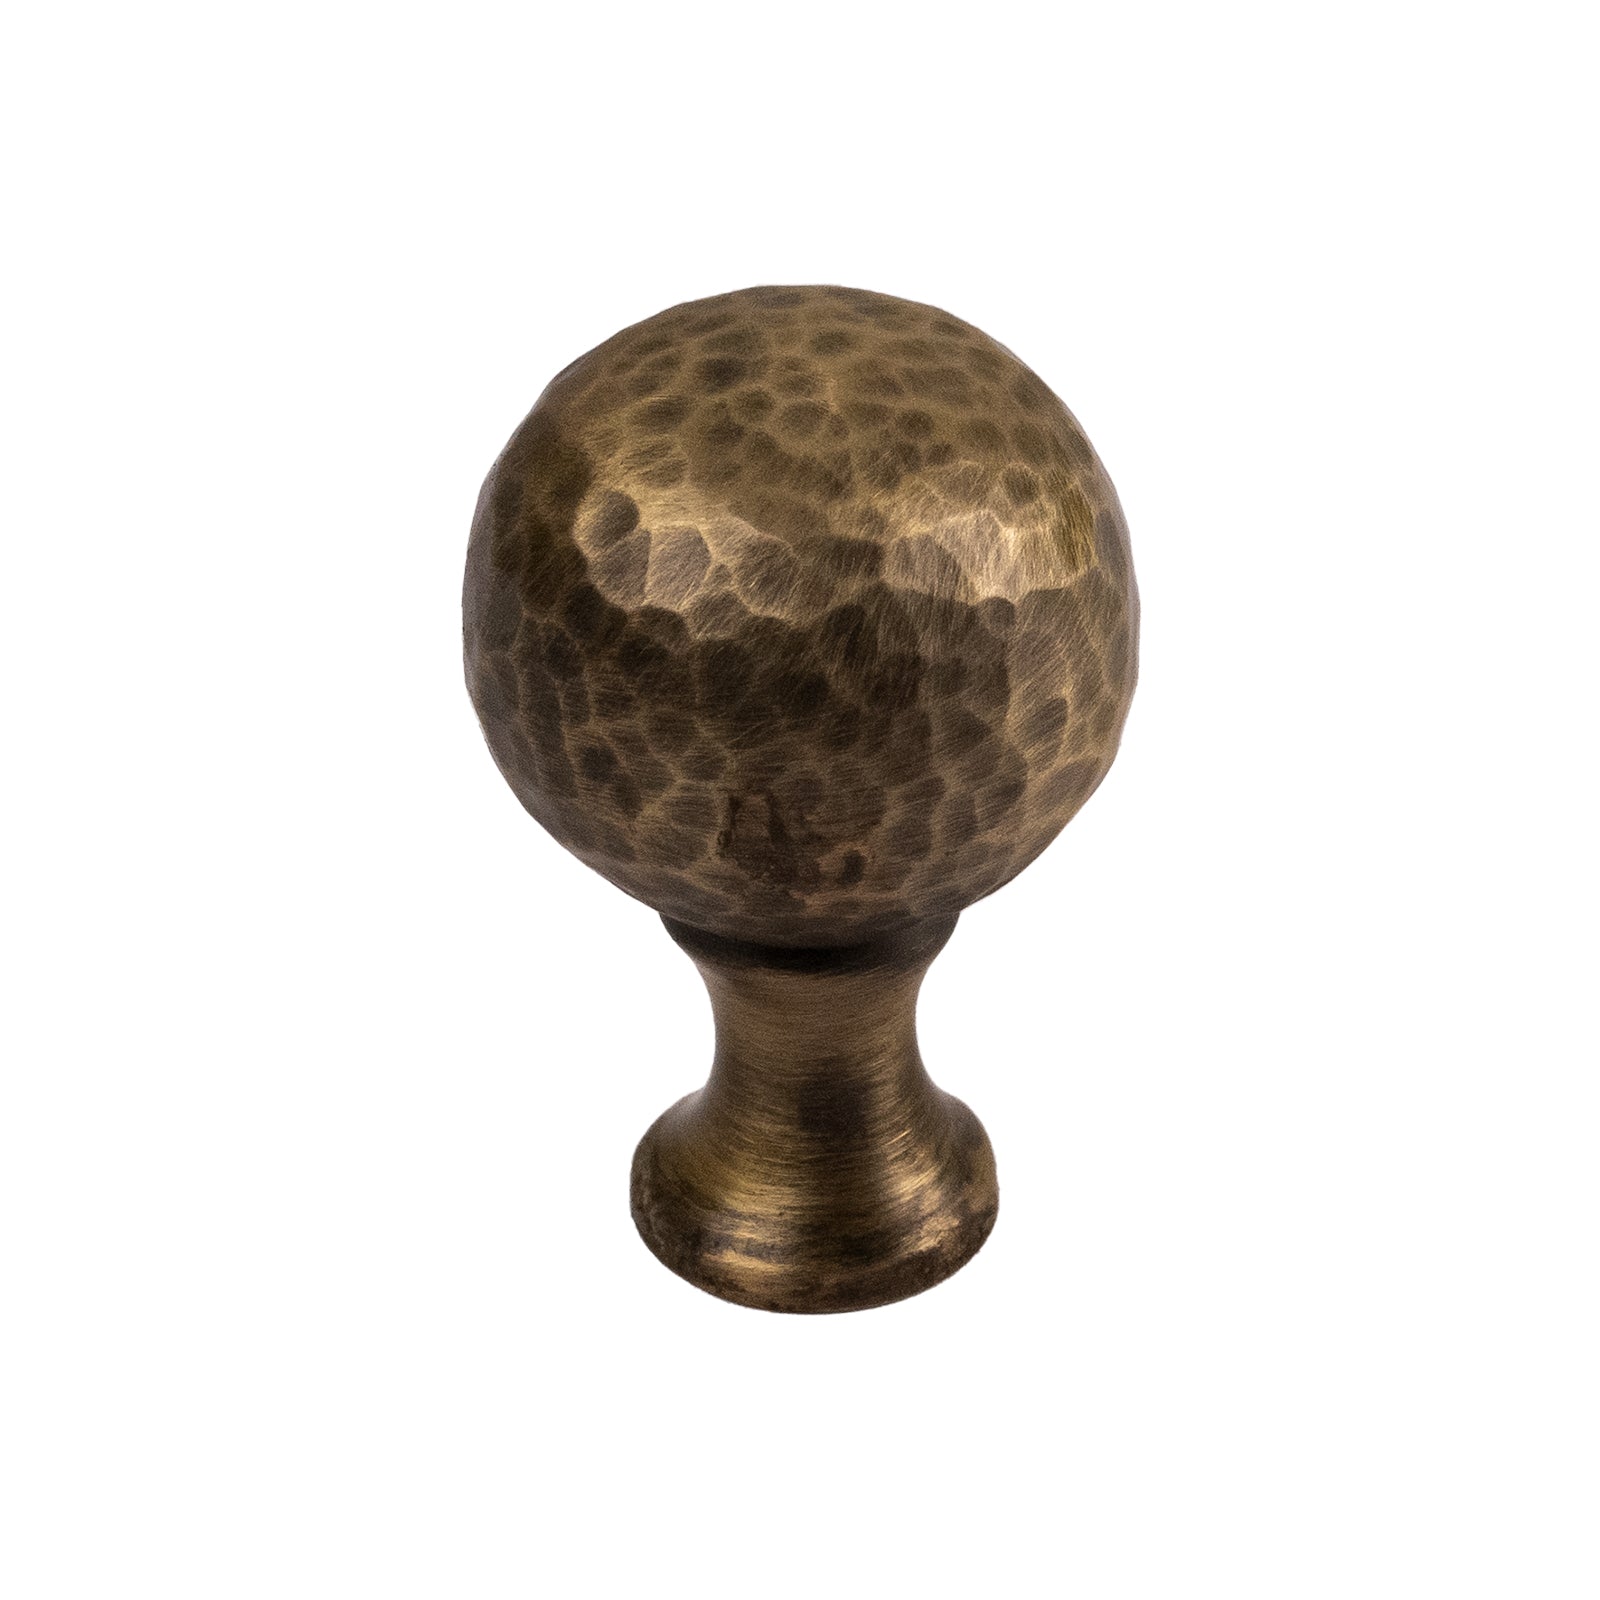 Antique Brass Ball Knob Hammered Finish 